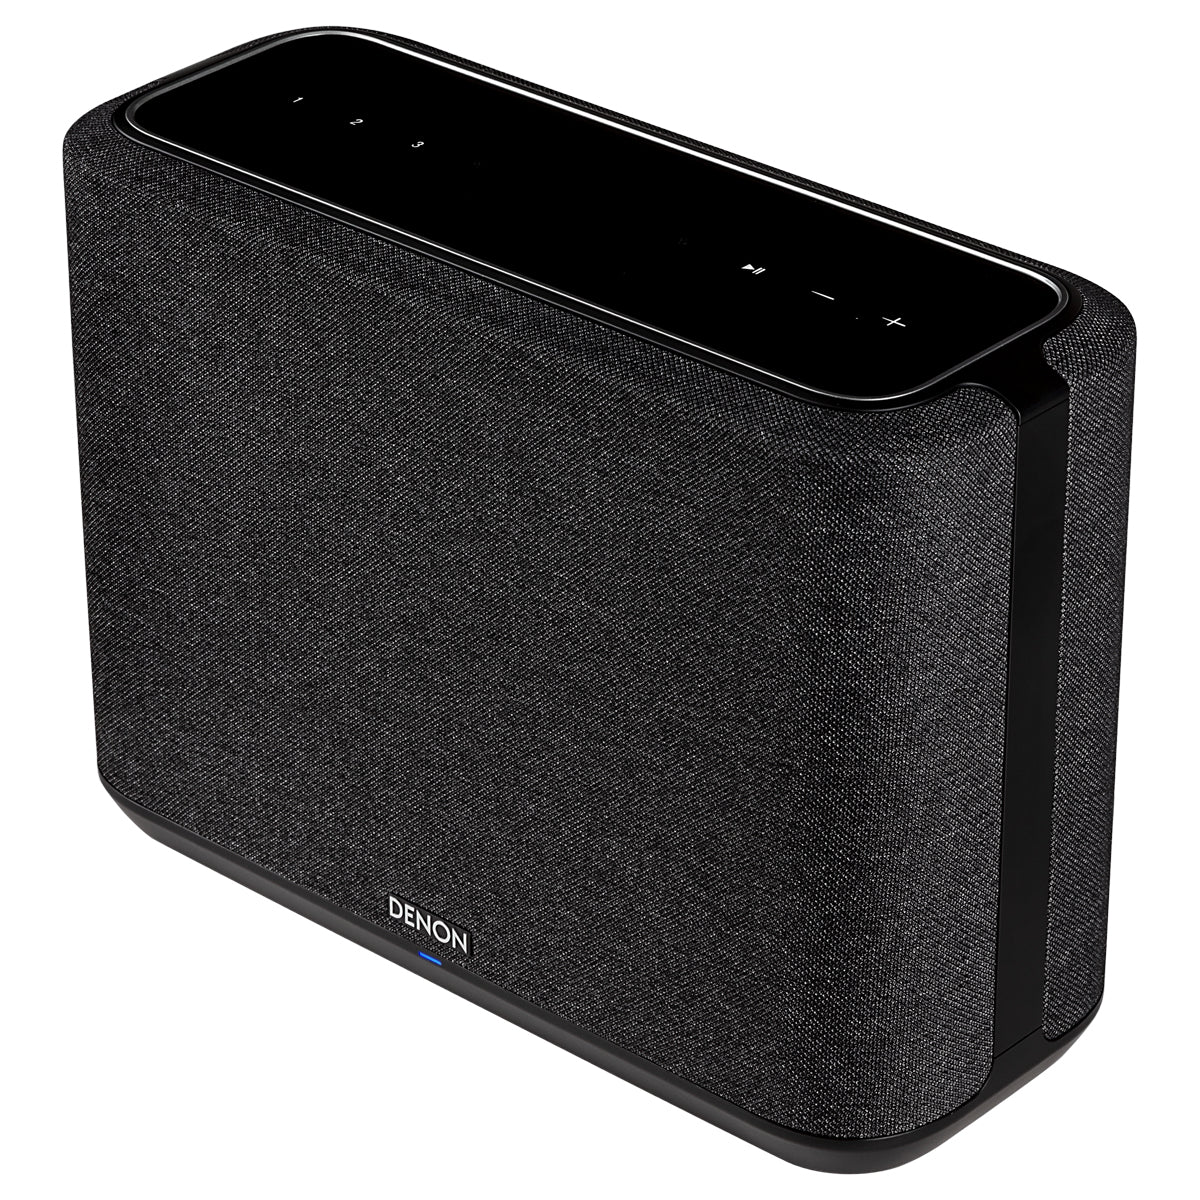 Denon Home 250 Wireless Speaker - Black - The Audio Experts